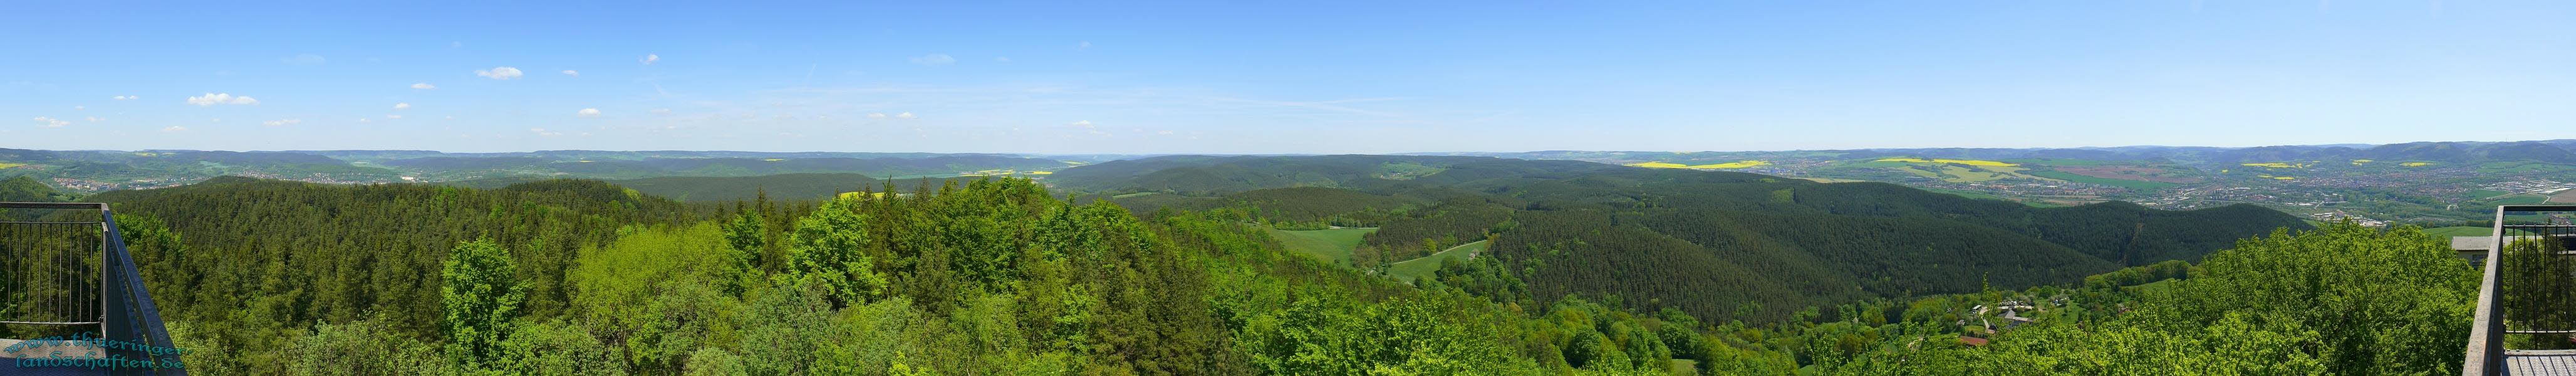 Blick vom Kulm Saalfeld nach Osten - Saaletal, Kahla, Unterwellenborn